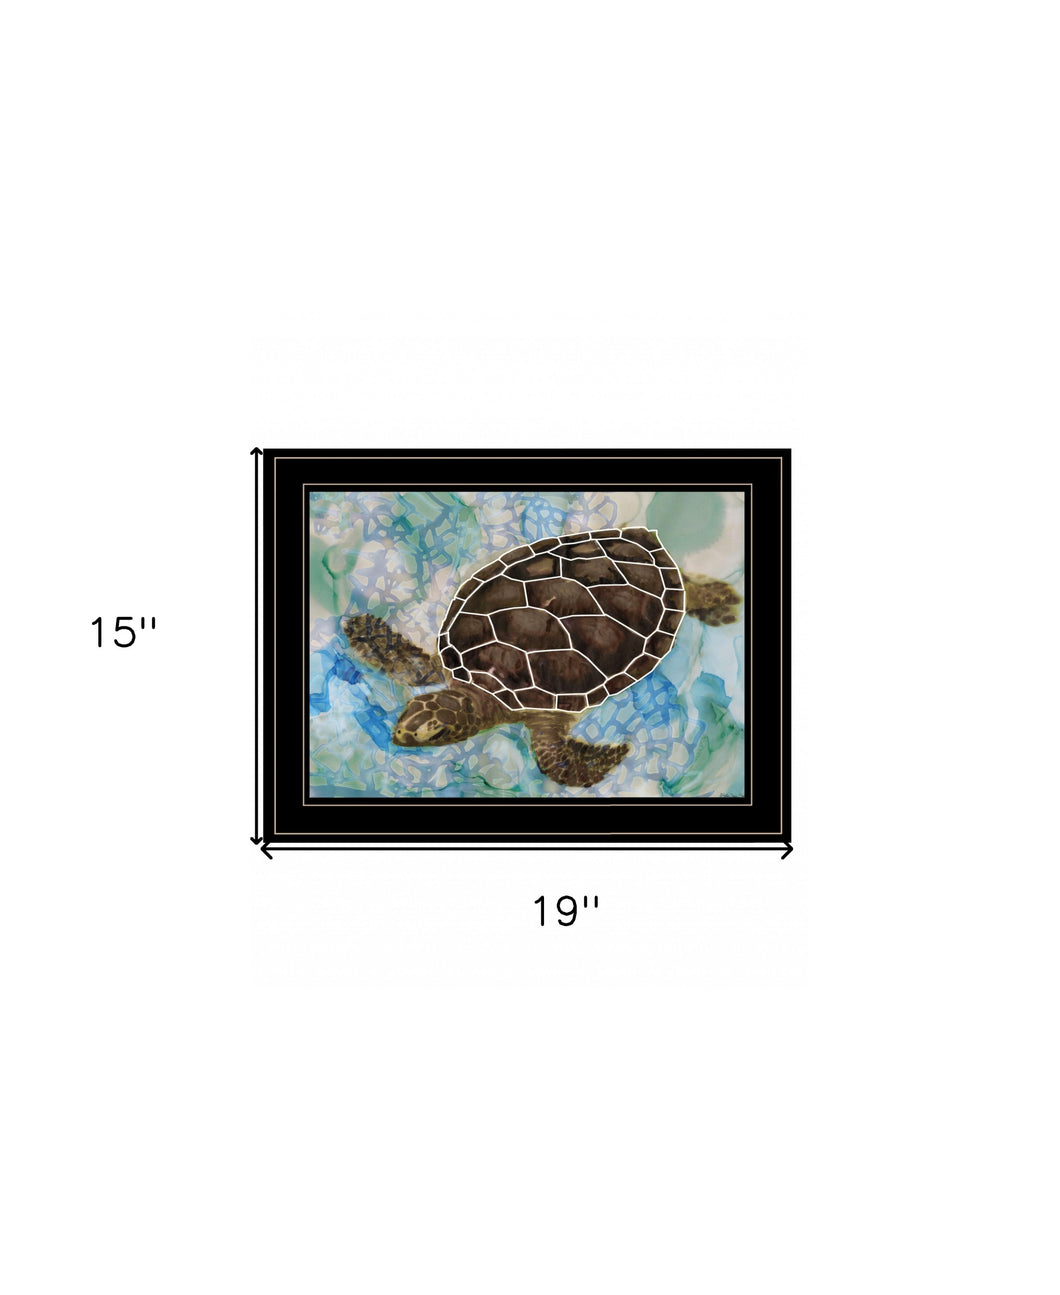 Sea Turtles Collage II 2 Black Framed Print Wall Art - Buy JJ's Stuff